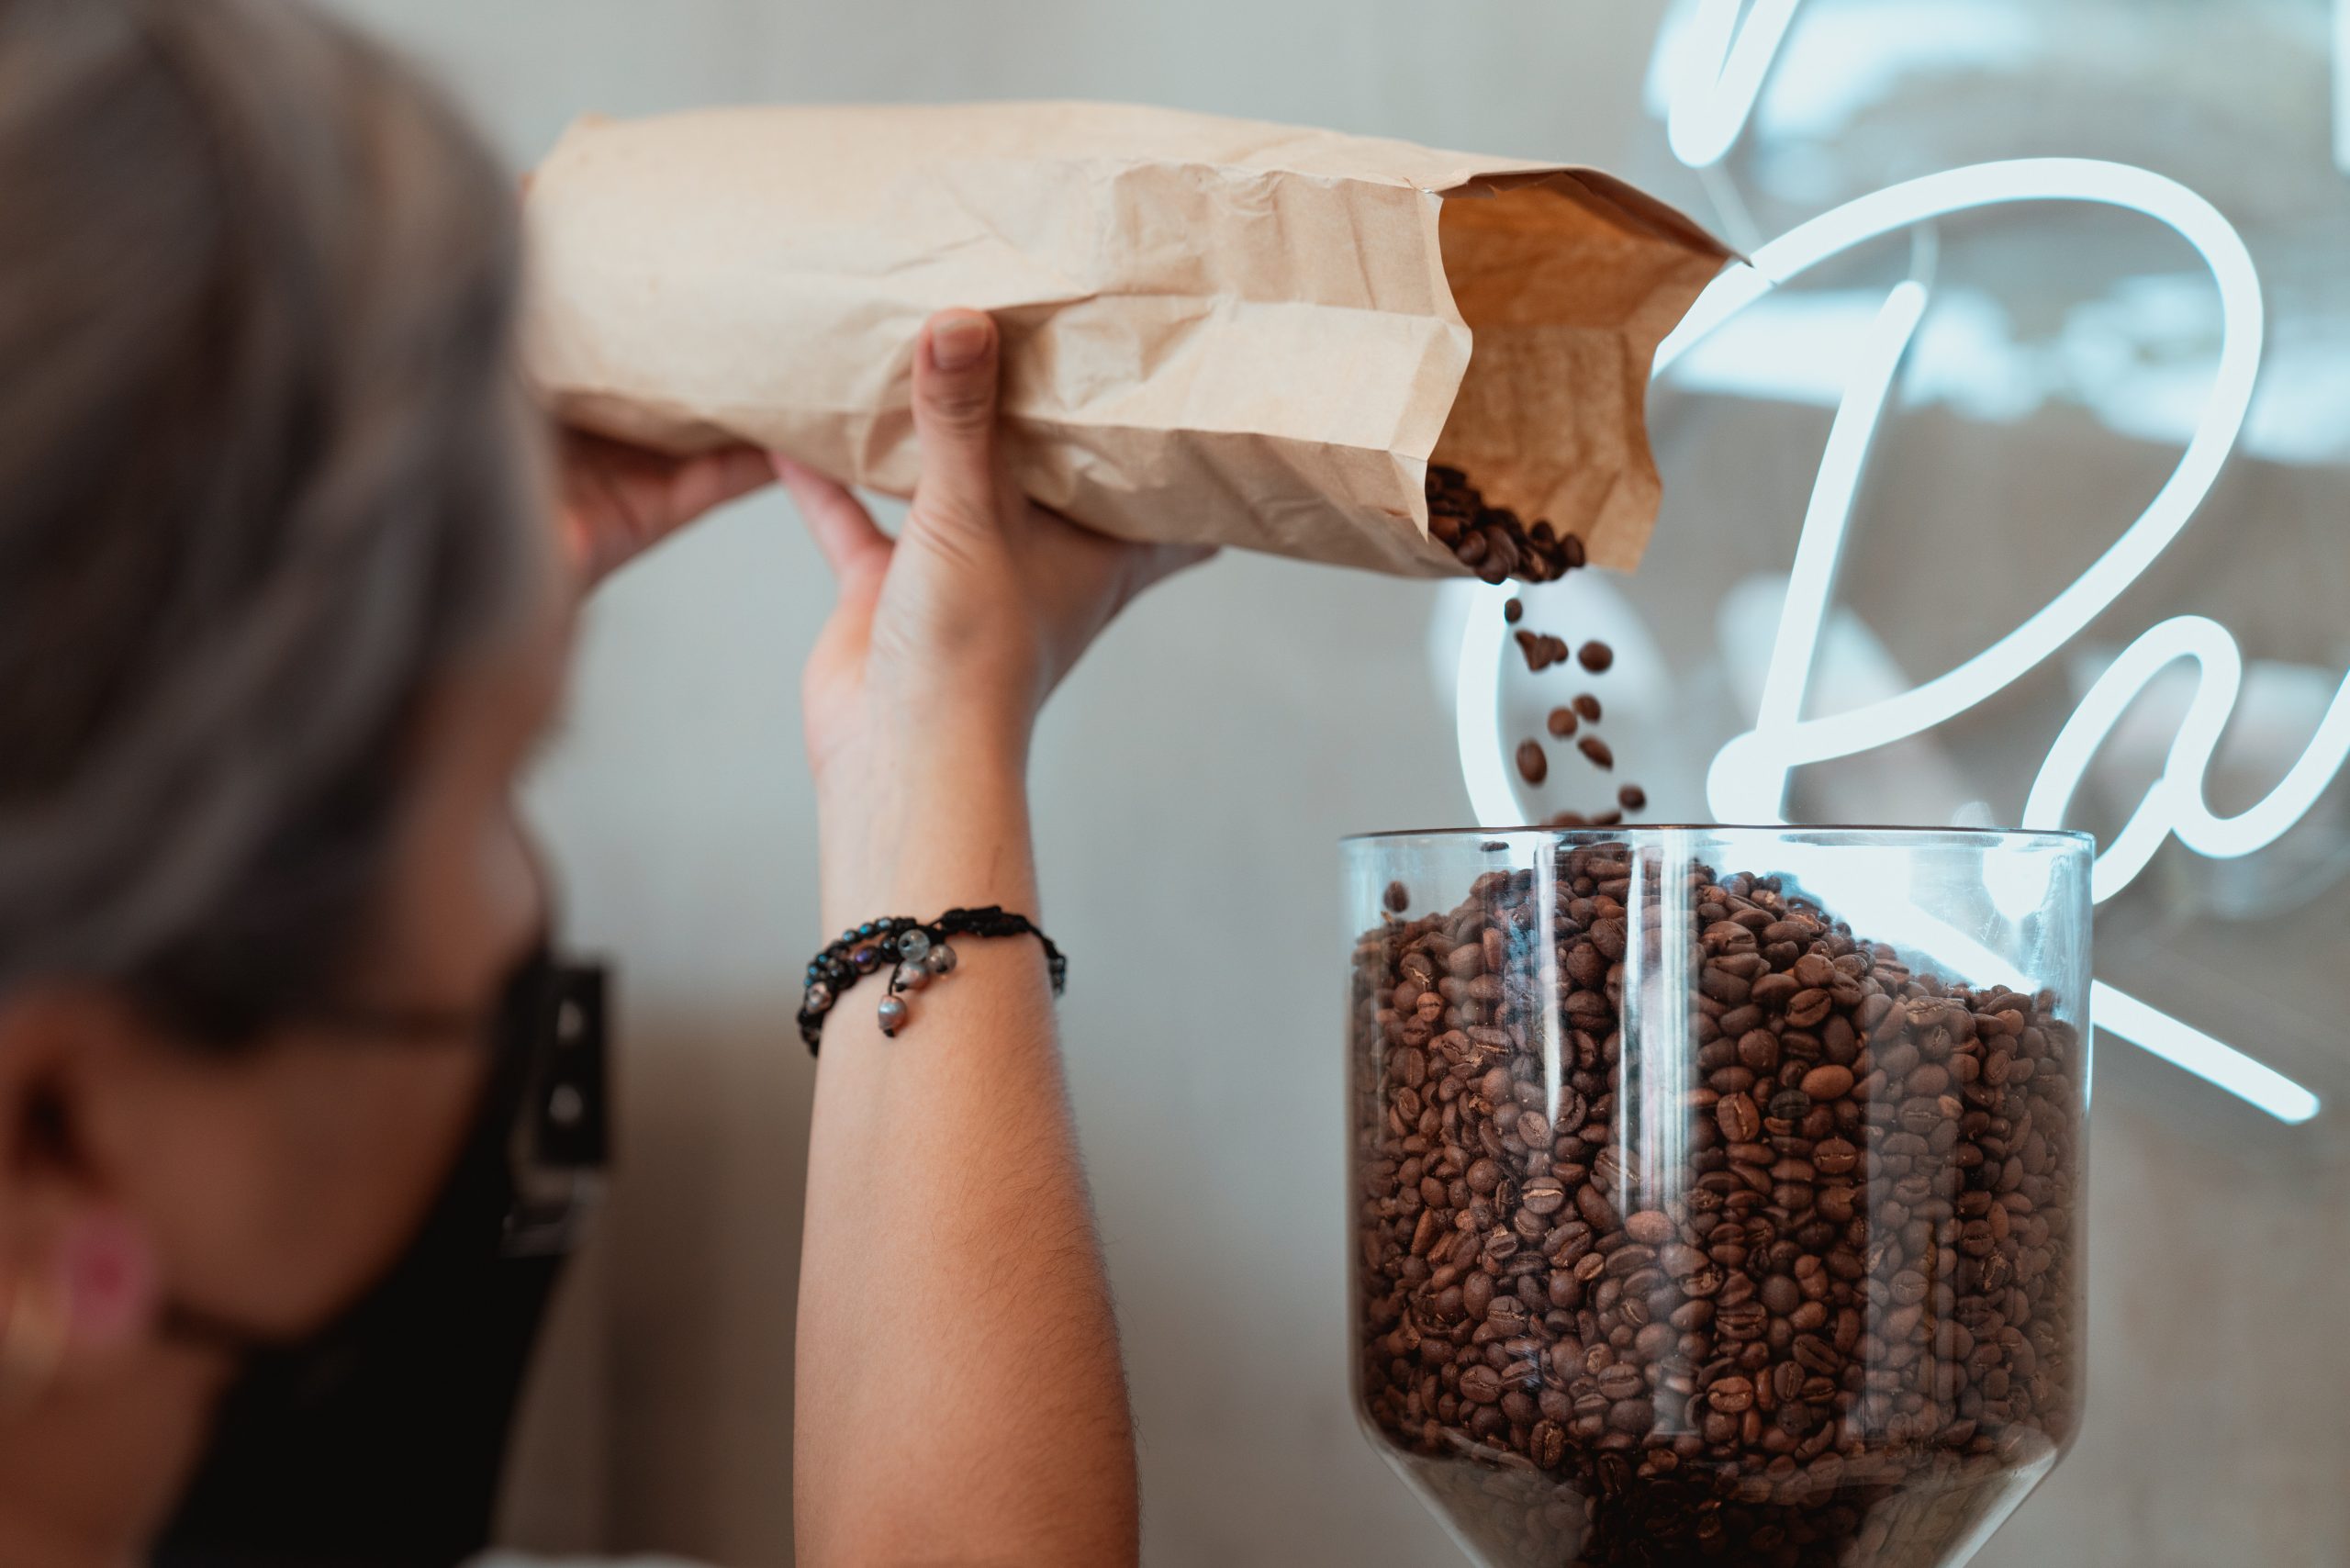 Transformasi Proses Pengendalian Kualitas dengan Logsheet Digital
Photo by Los  Muertos Crew: https://www.pexels.com/photo/photo-of-barista-pouring-fresh-coffee-beans-on-coffee-grinder-7487360/